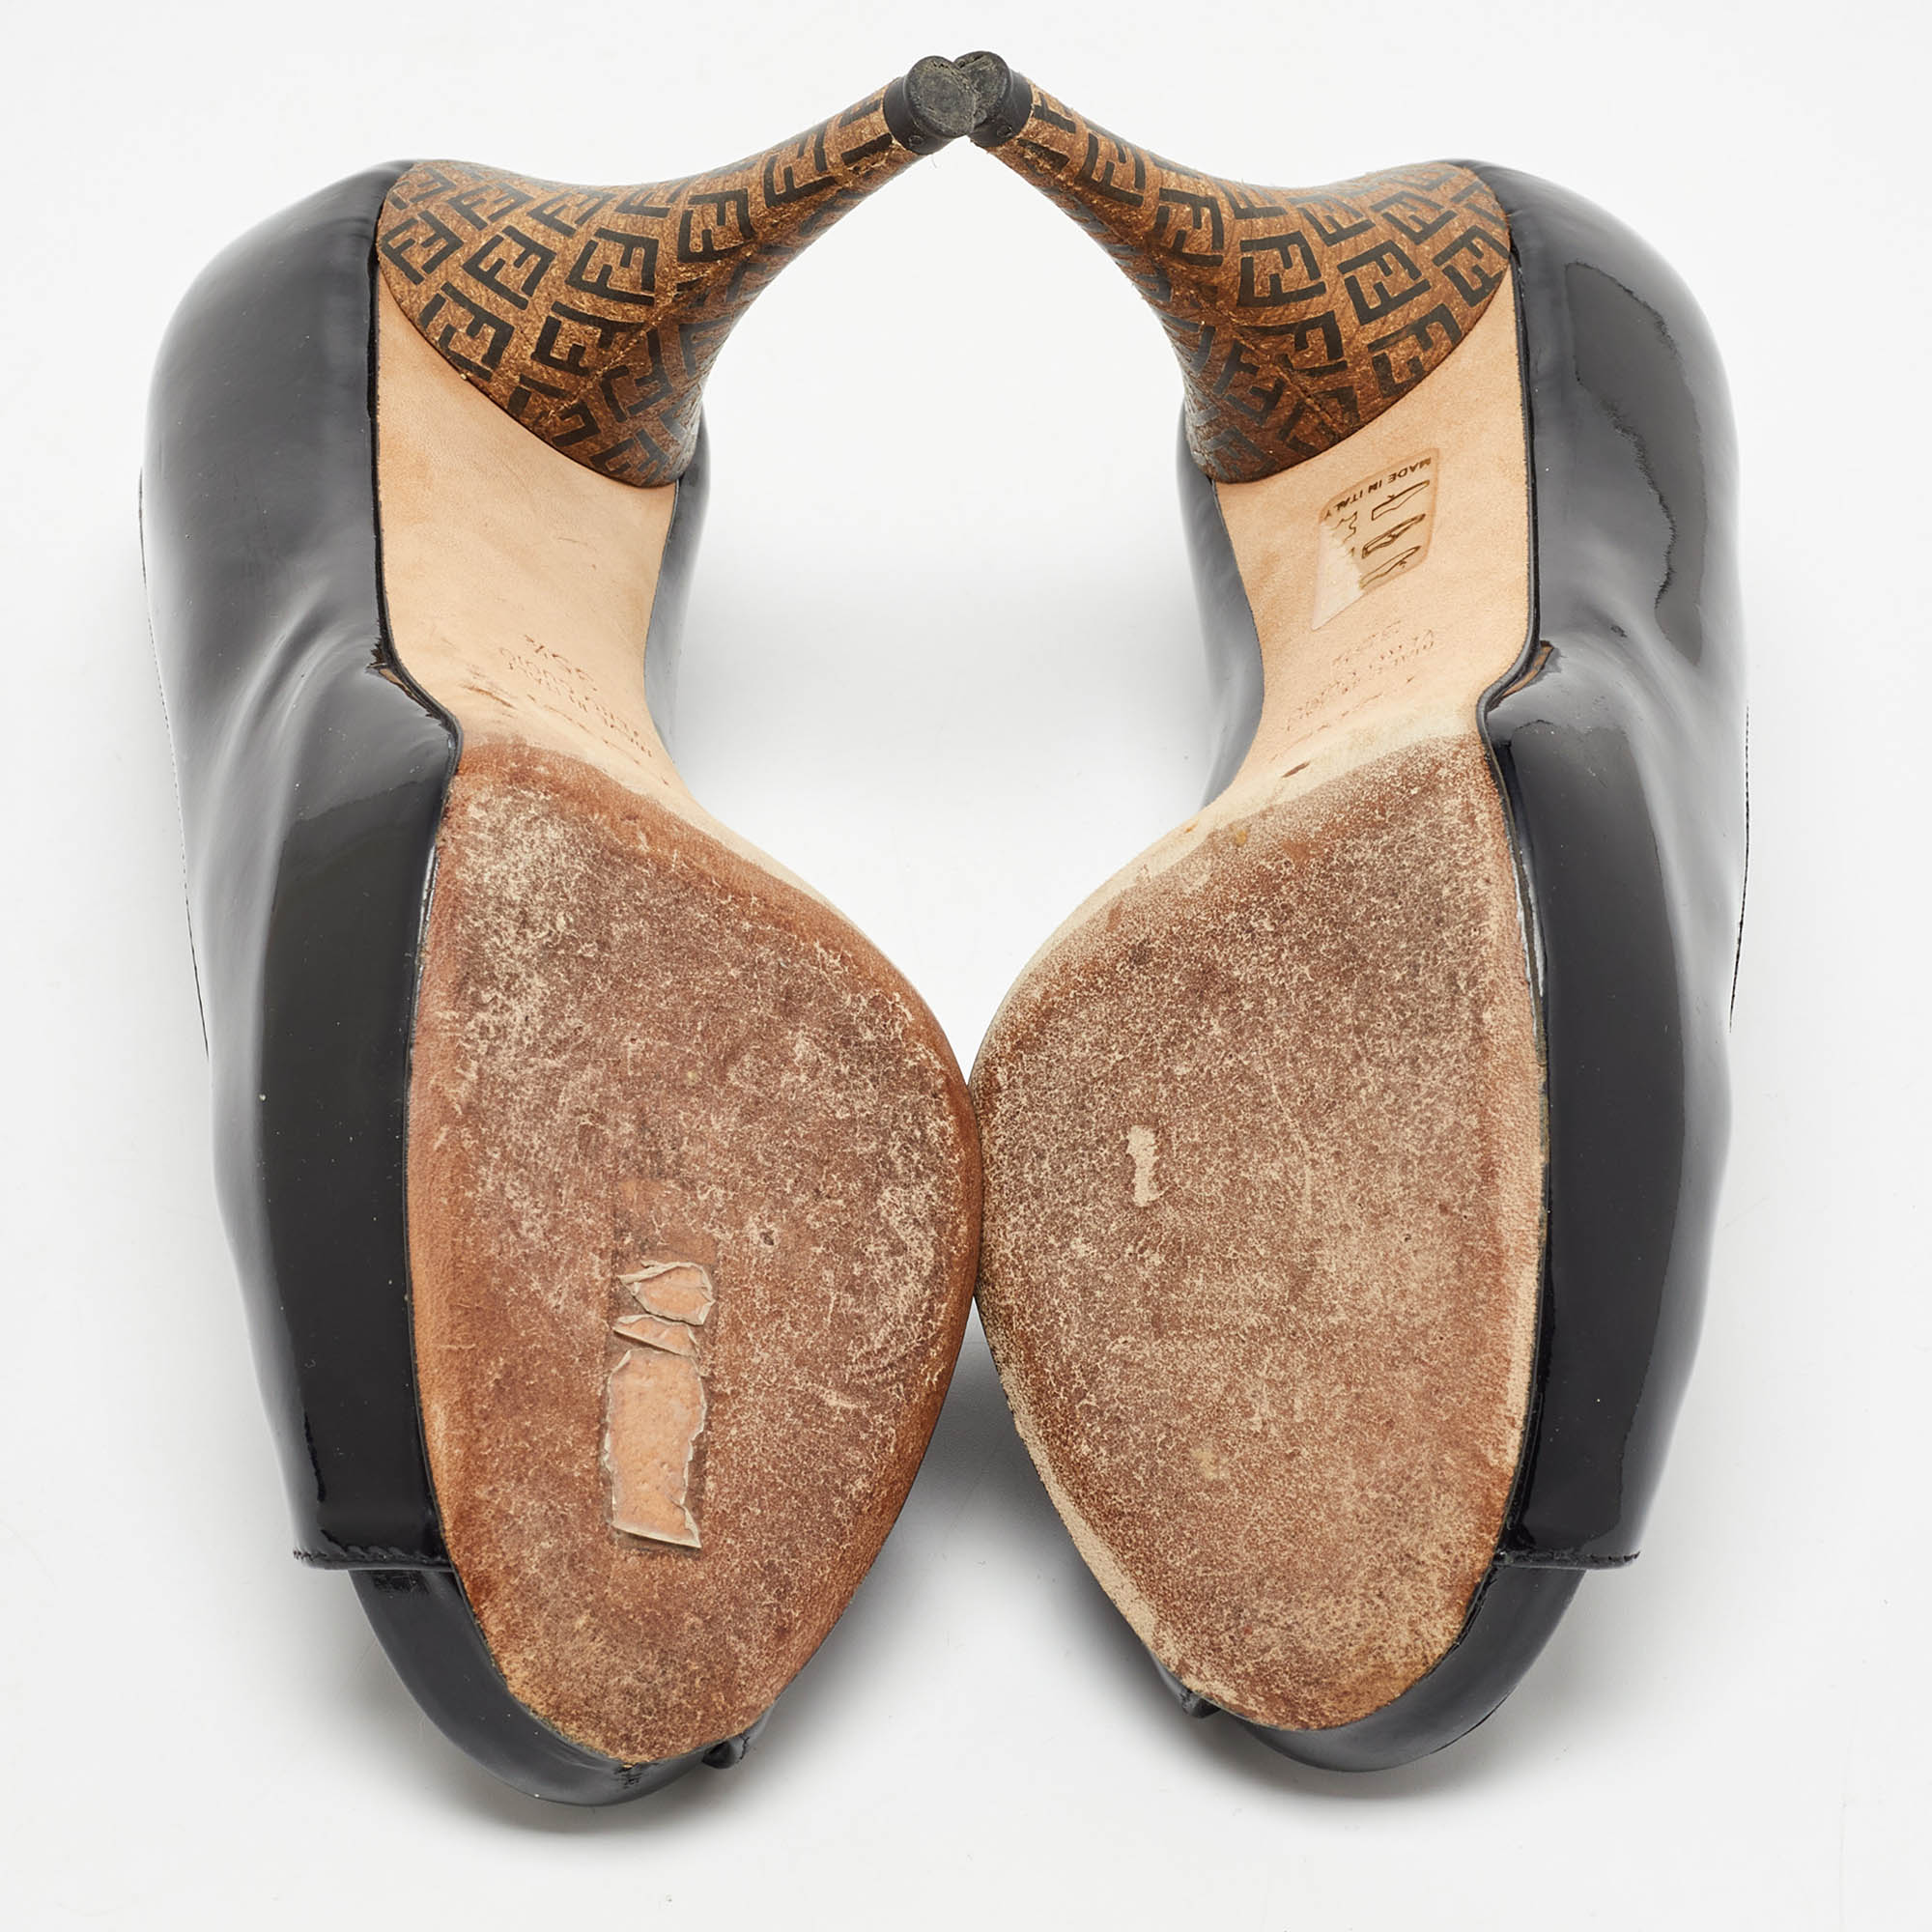 Fendi Black Patent Leather FF Heels Peep Toe Platform Pumps Size 35.5